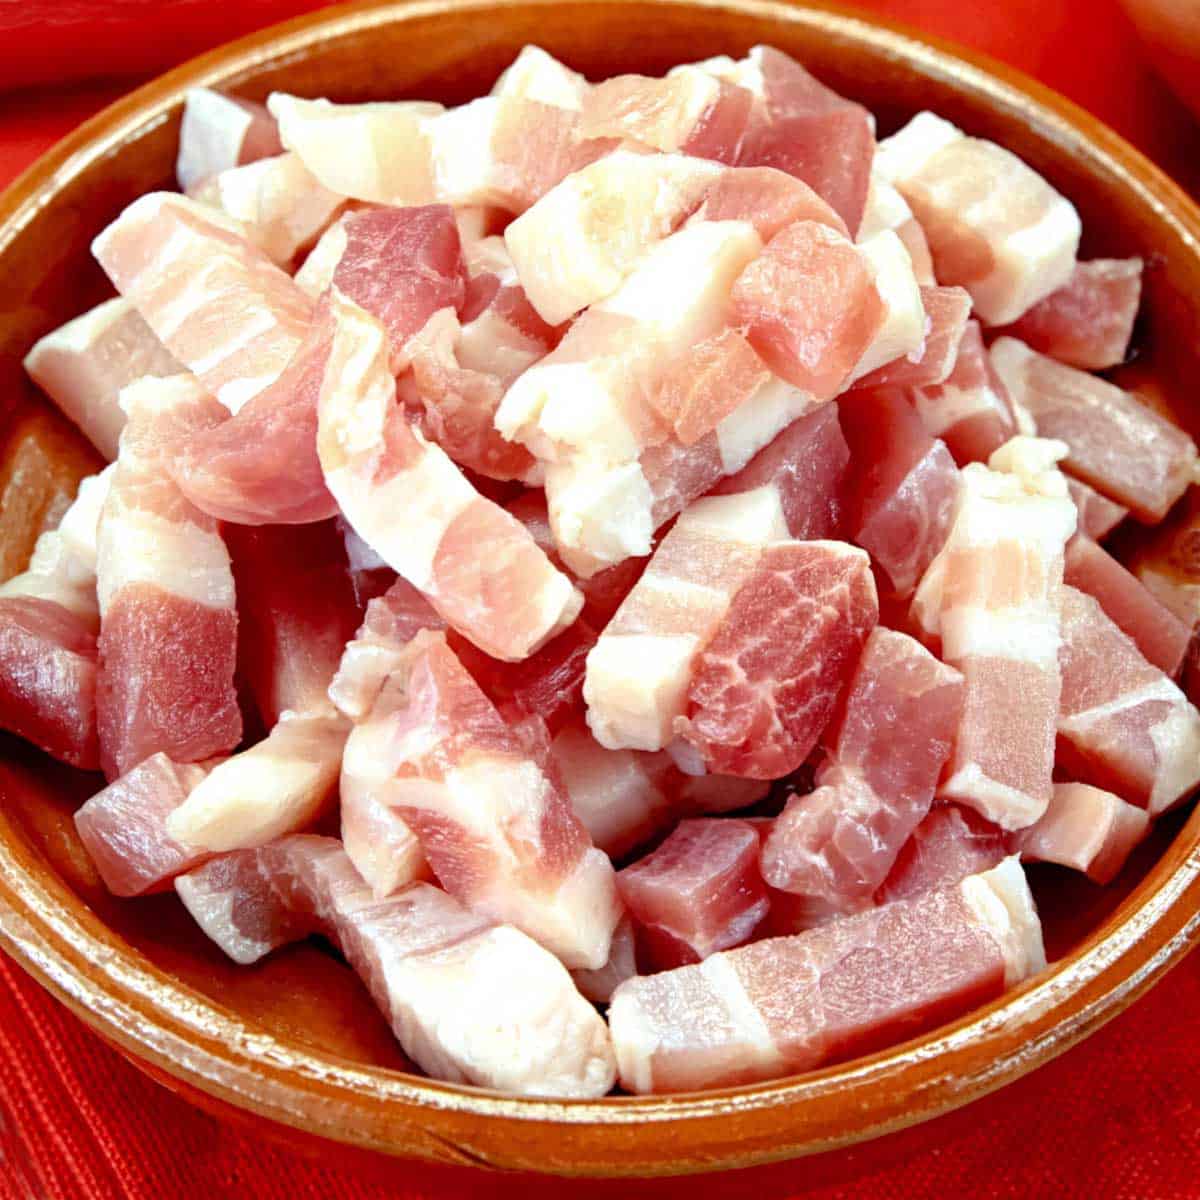 Raw bacon lardons cut from slab bacon in a red bowl.